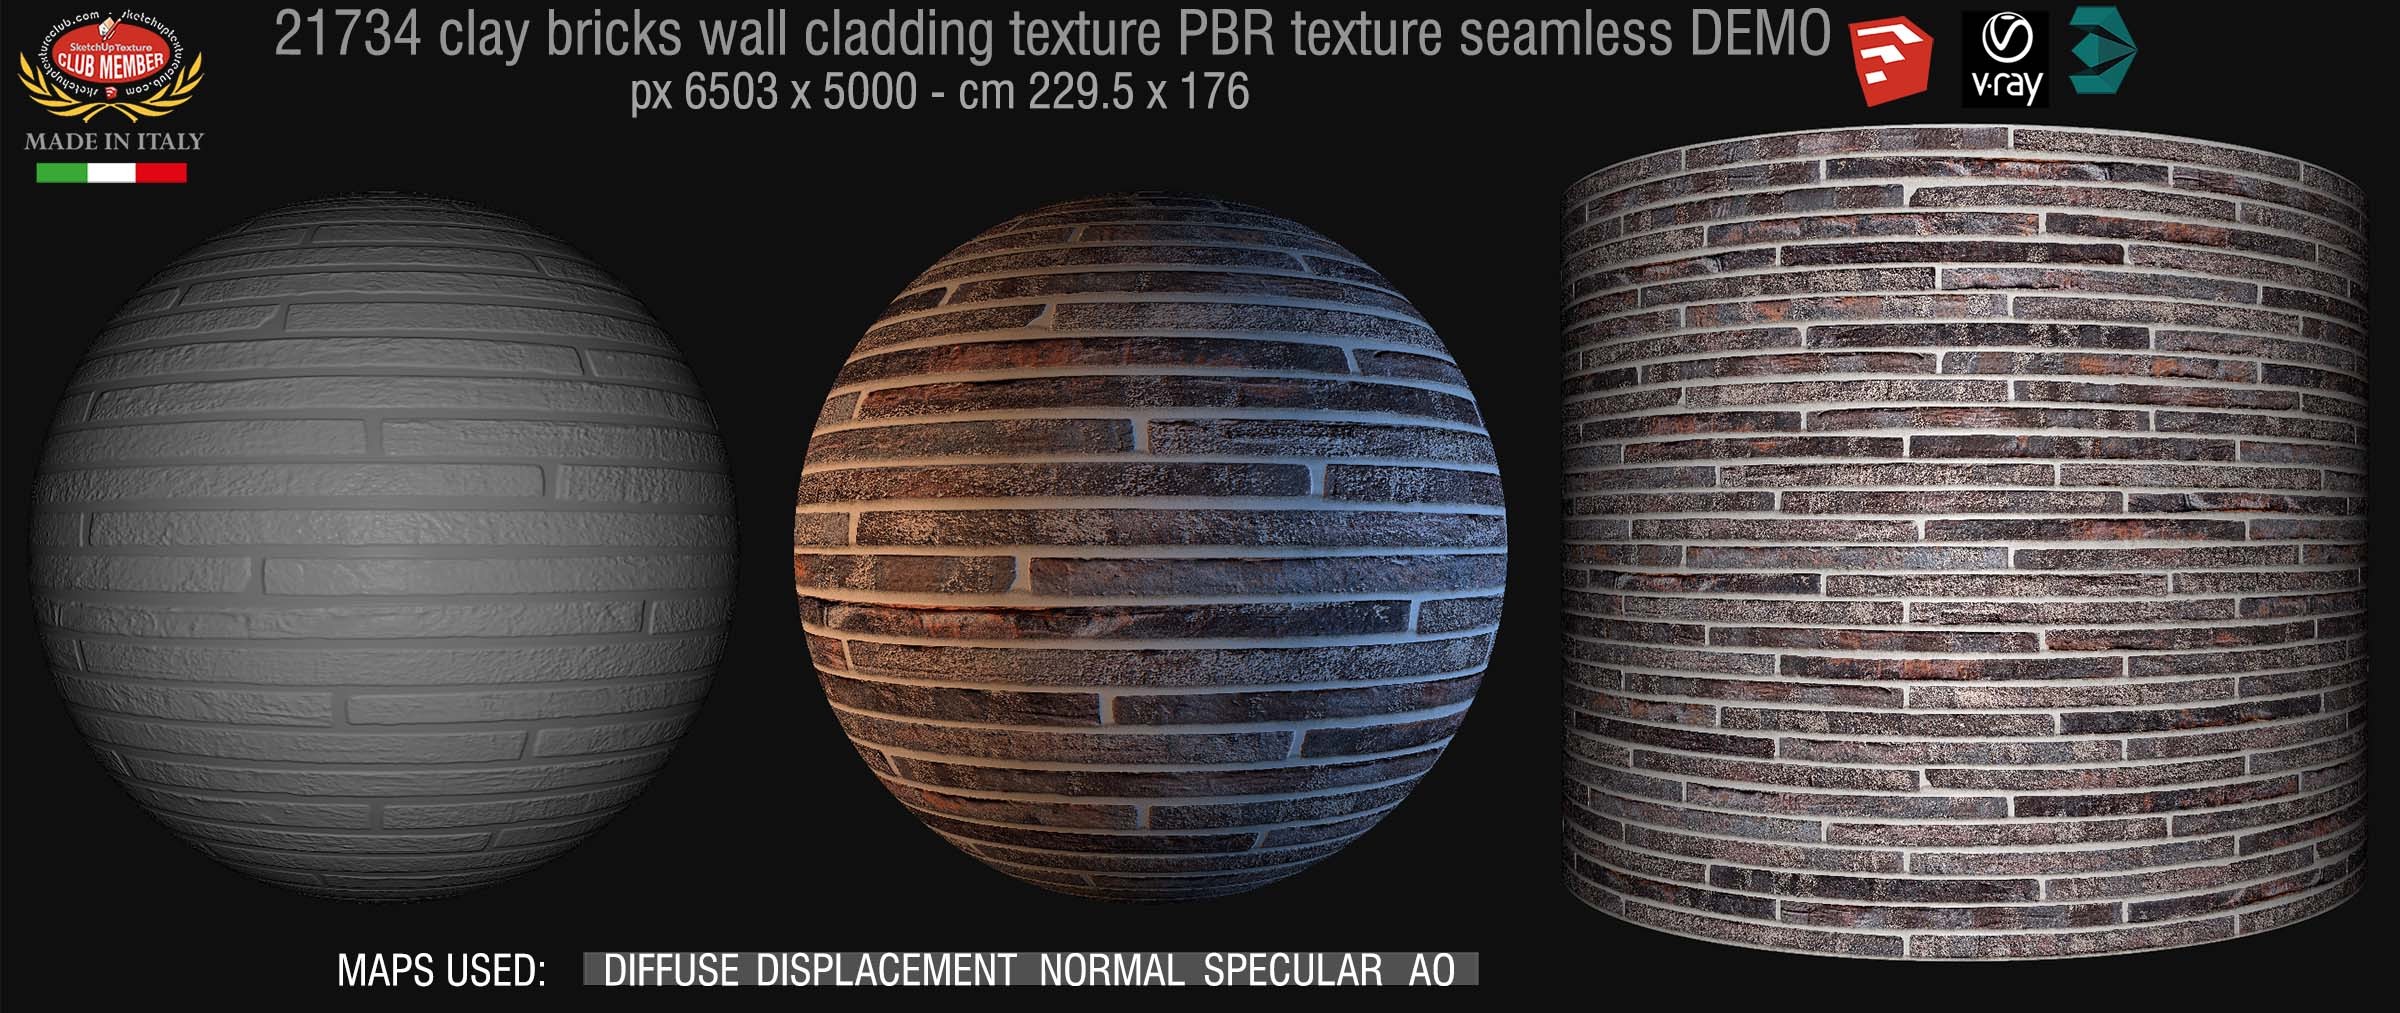 21734 Clay bricks wall cladding PBR texture seamless DEMO